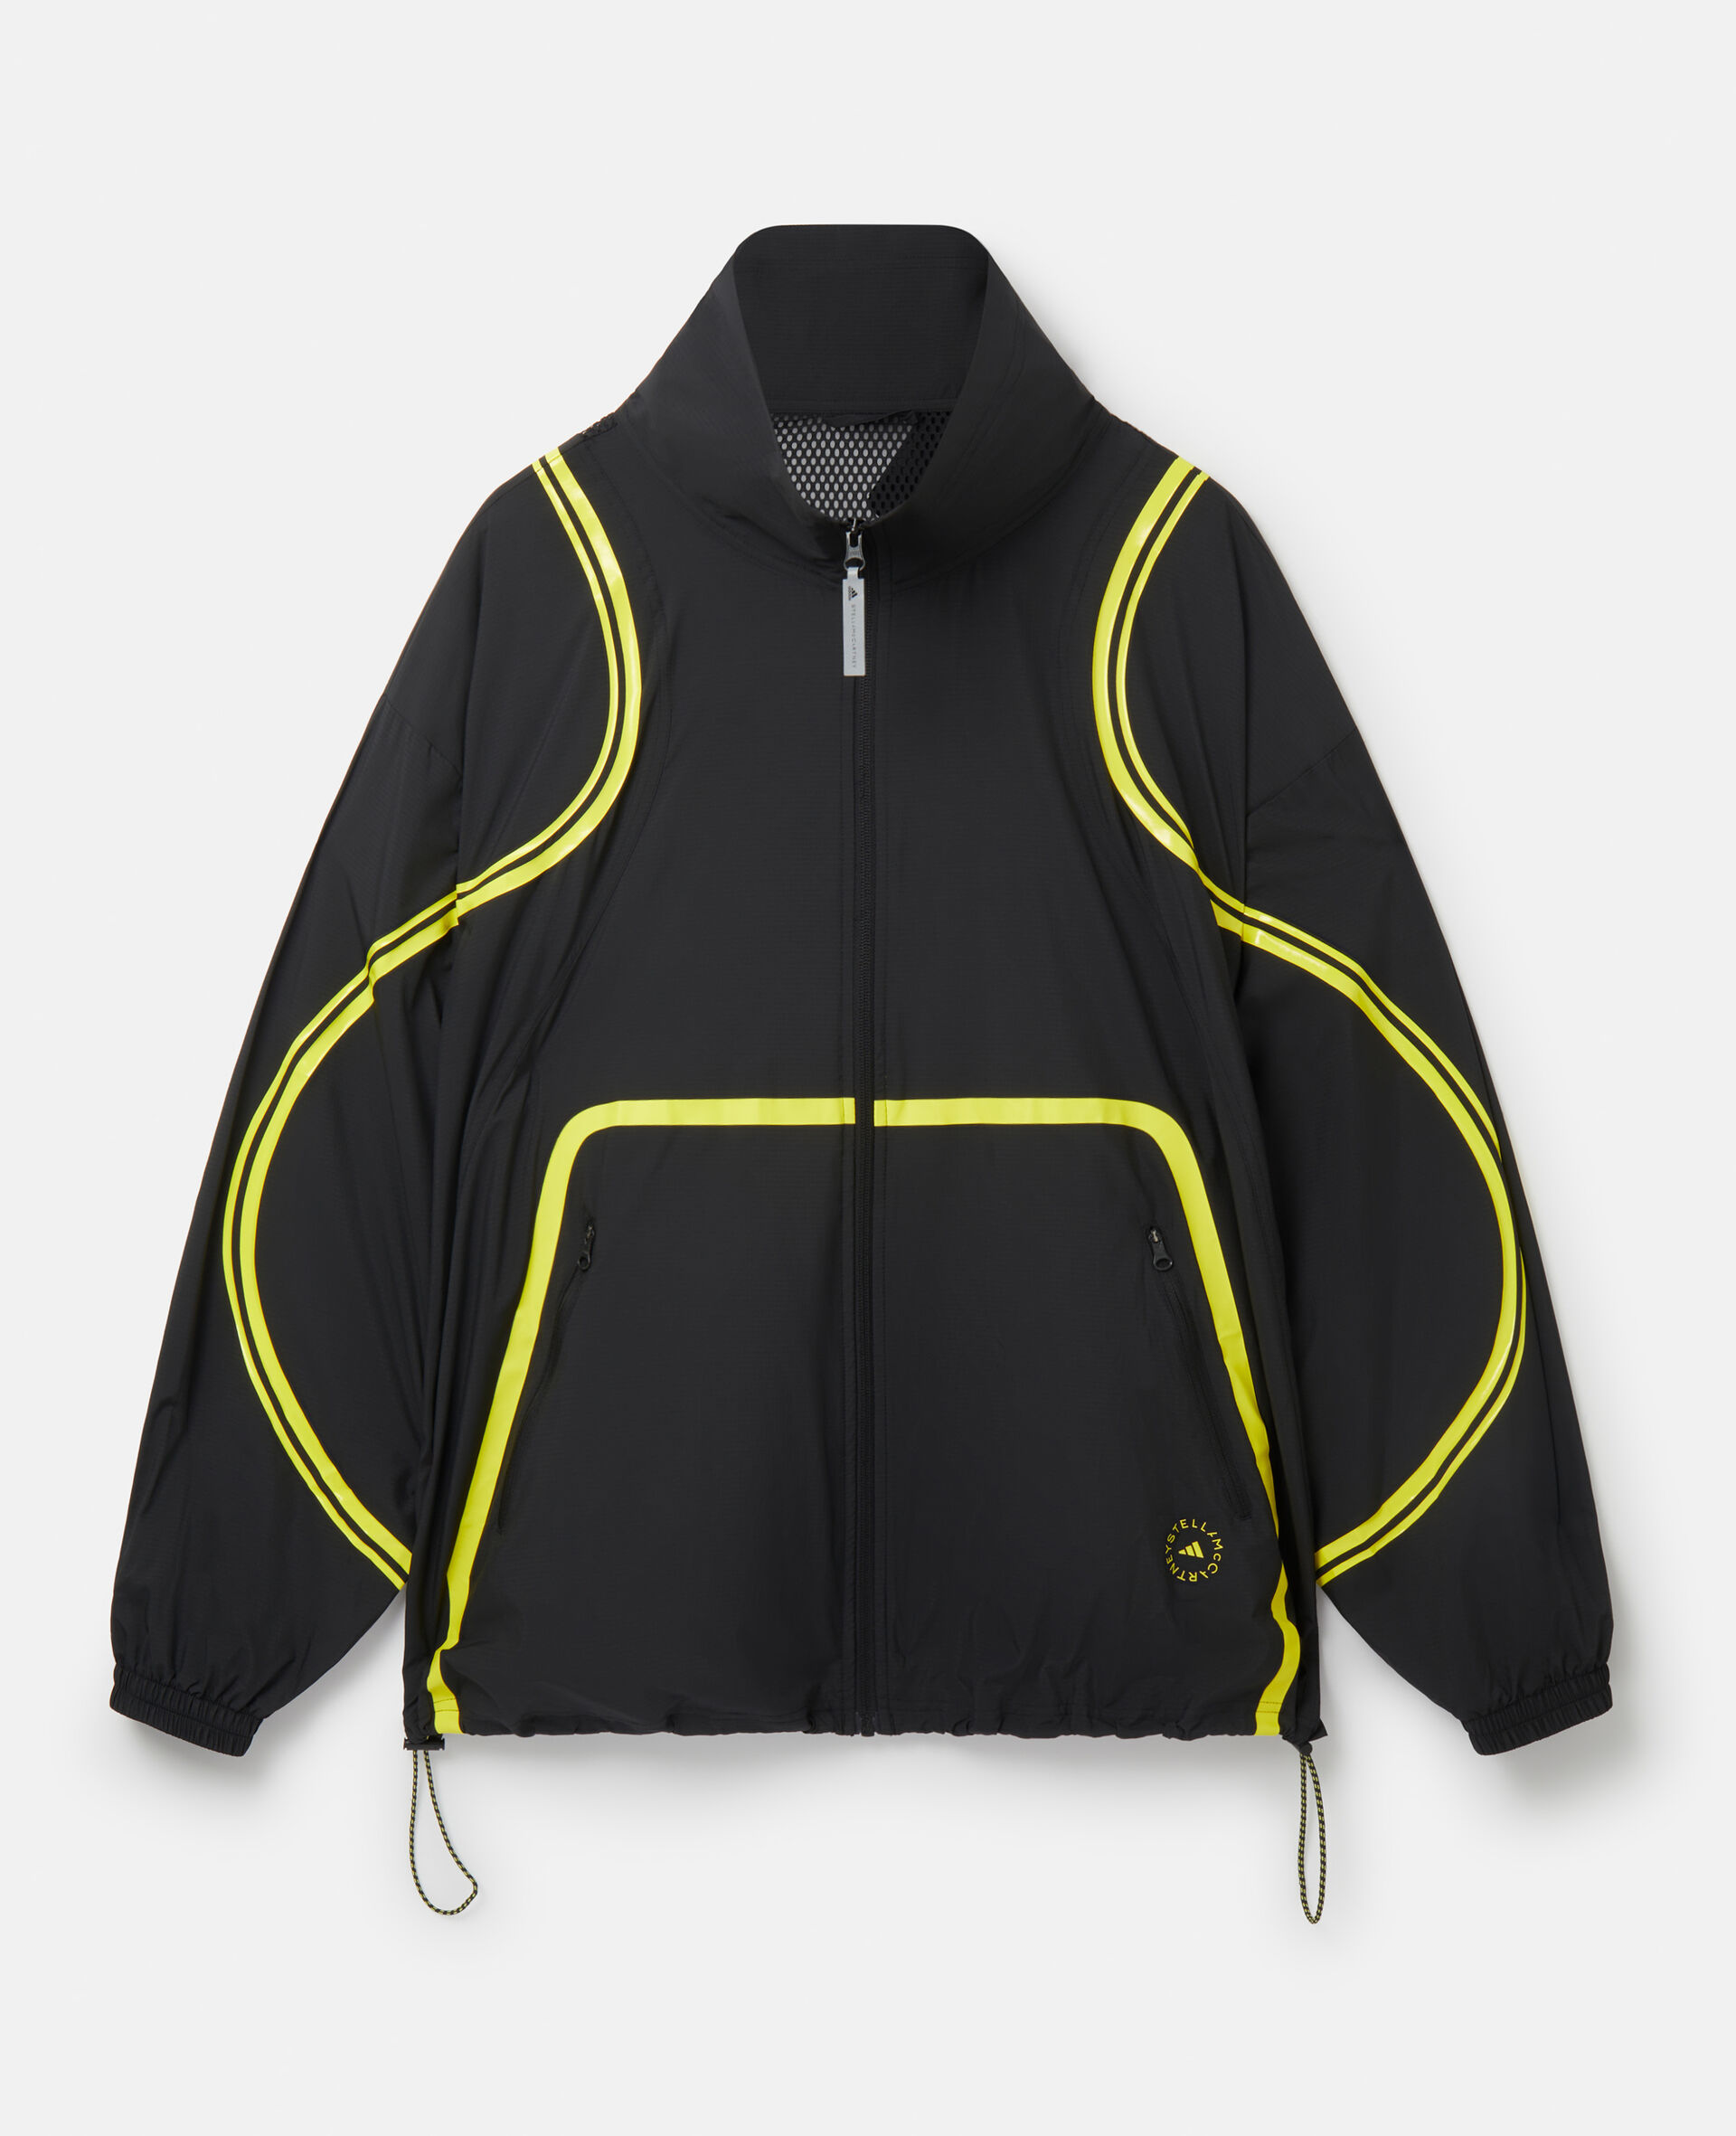 TruePace Woven Trainingsuit Plus Size Jacket-Black-large image number 0